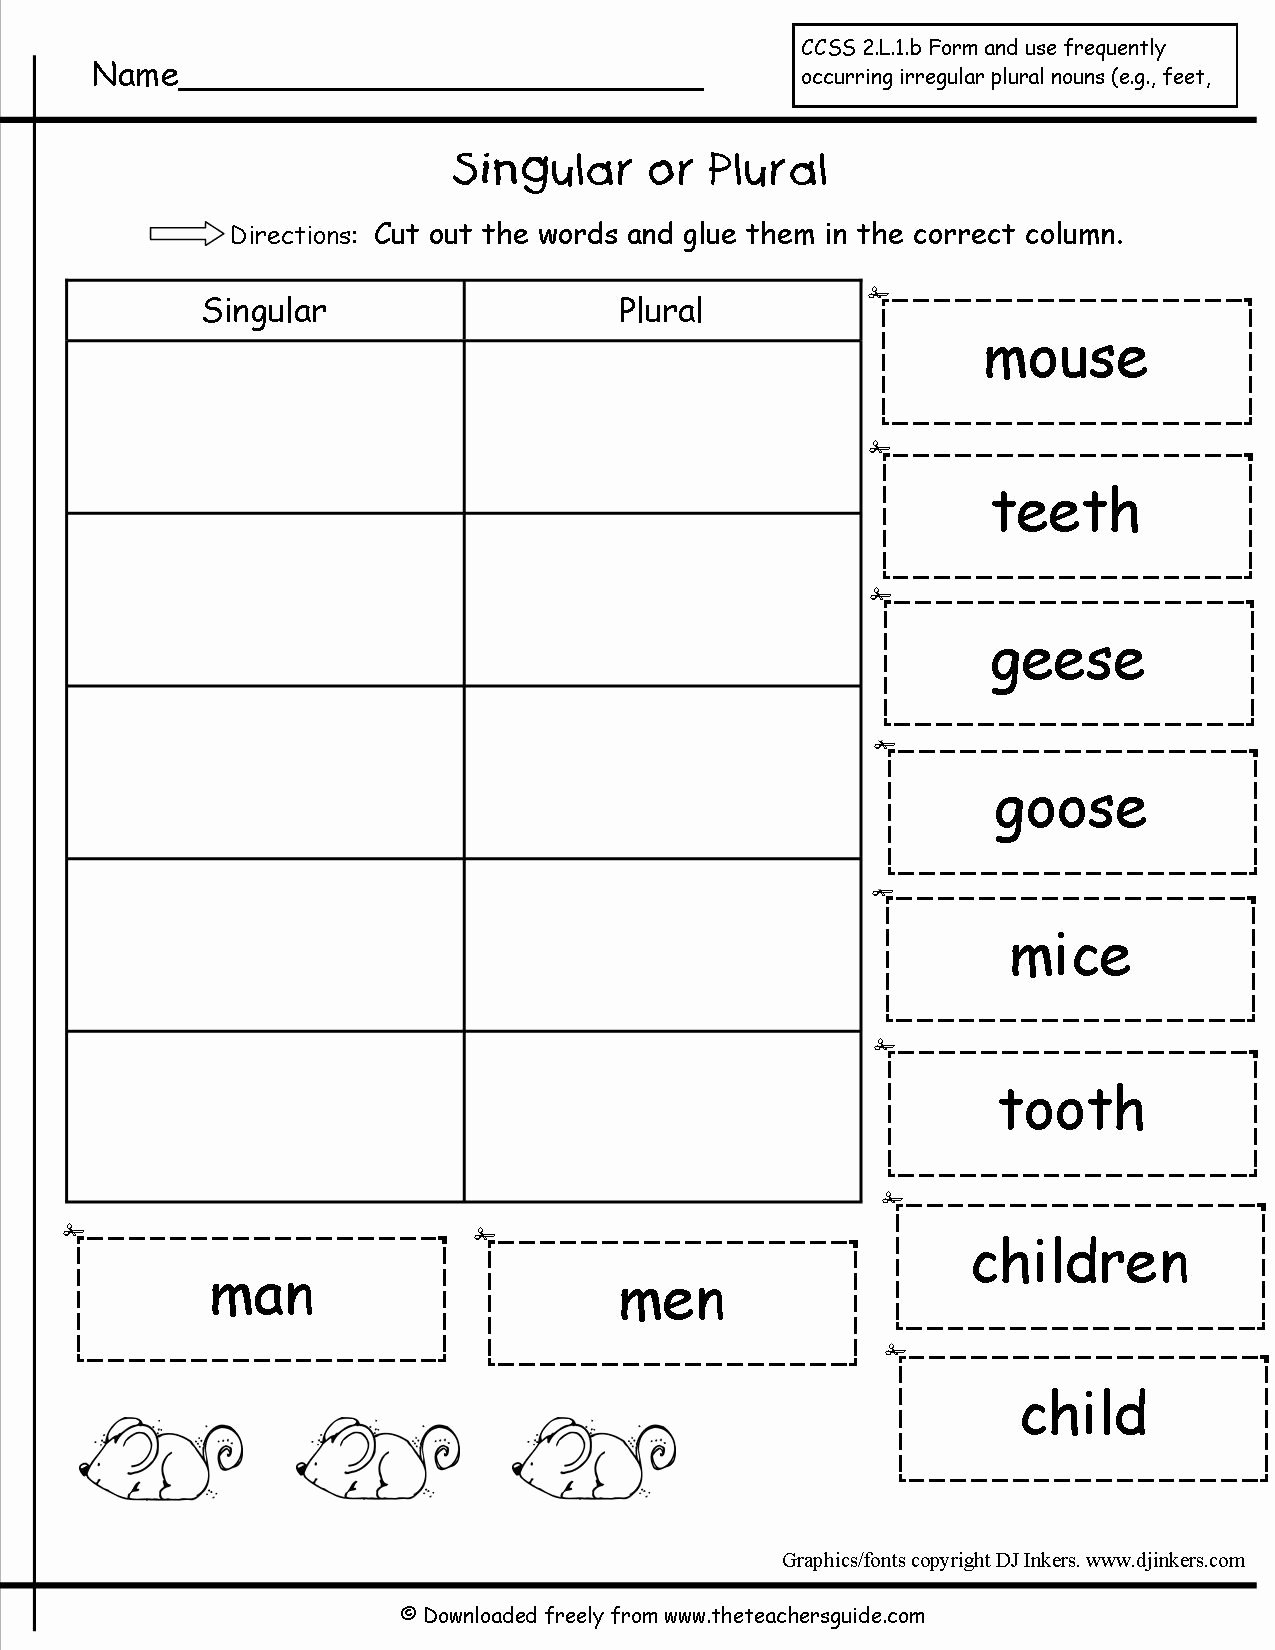 Singular and Plural Nouns Worksheet Fresh Singular and Plural Nouns Worksheets From the Teacher S Guide